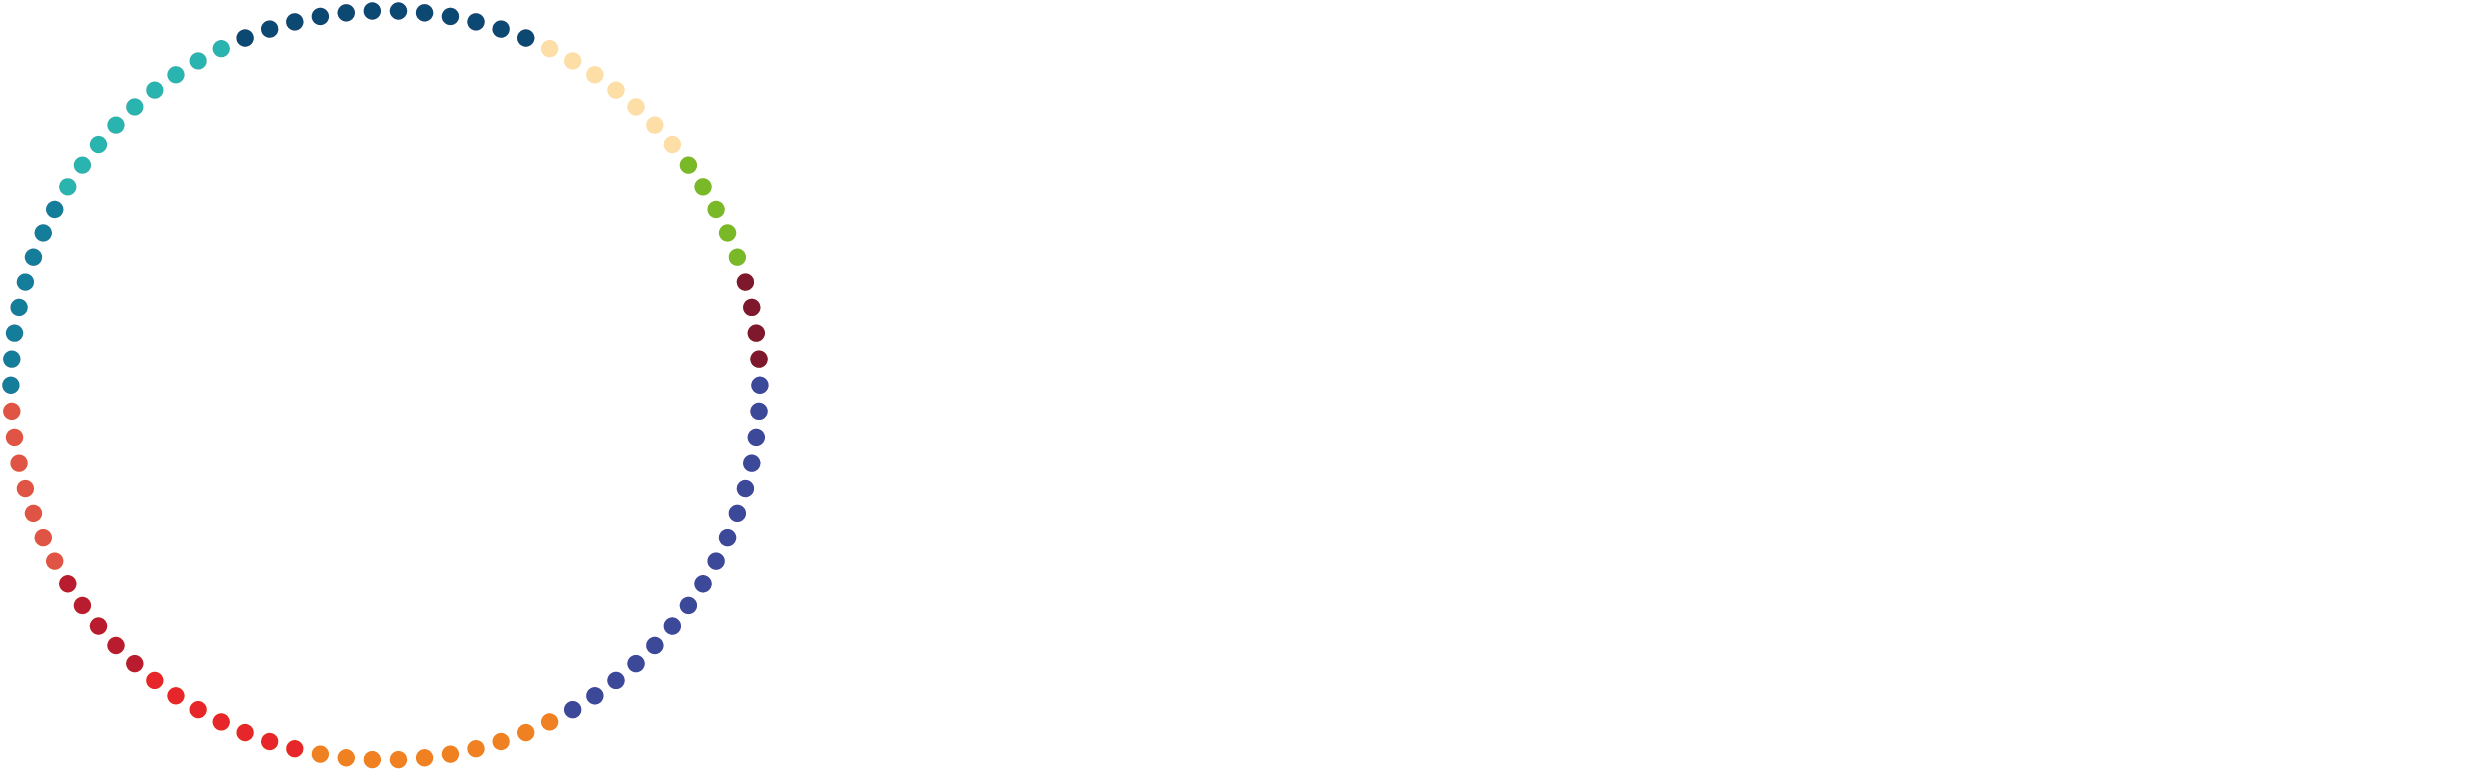 VEME - International Bioinformatics Workshop on Virus Evolution and Molecular Epidemiology